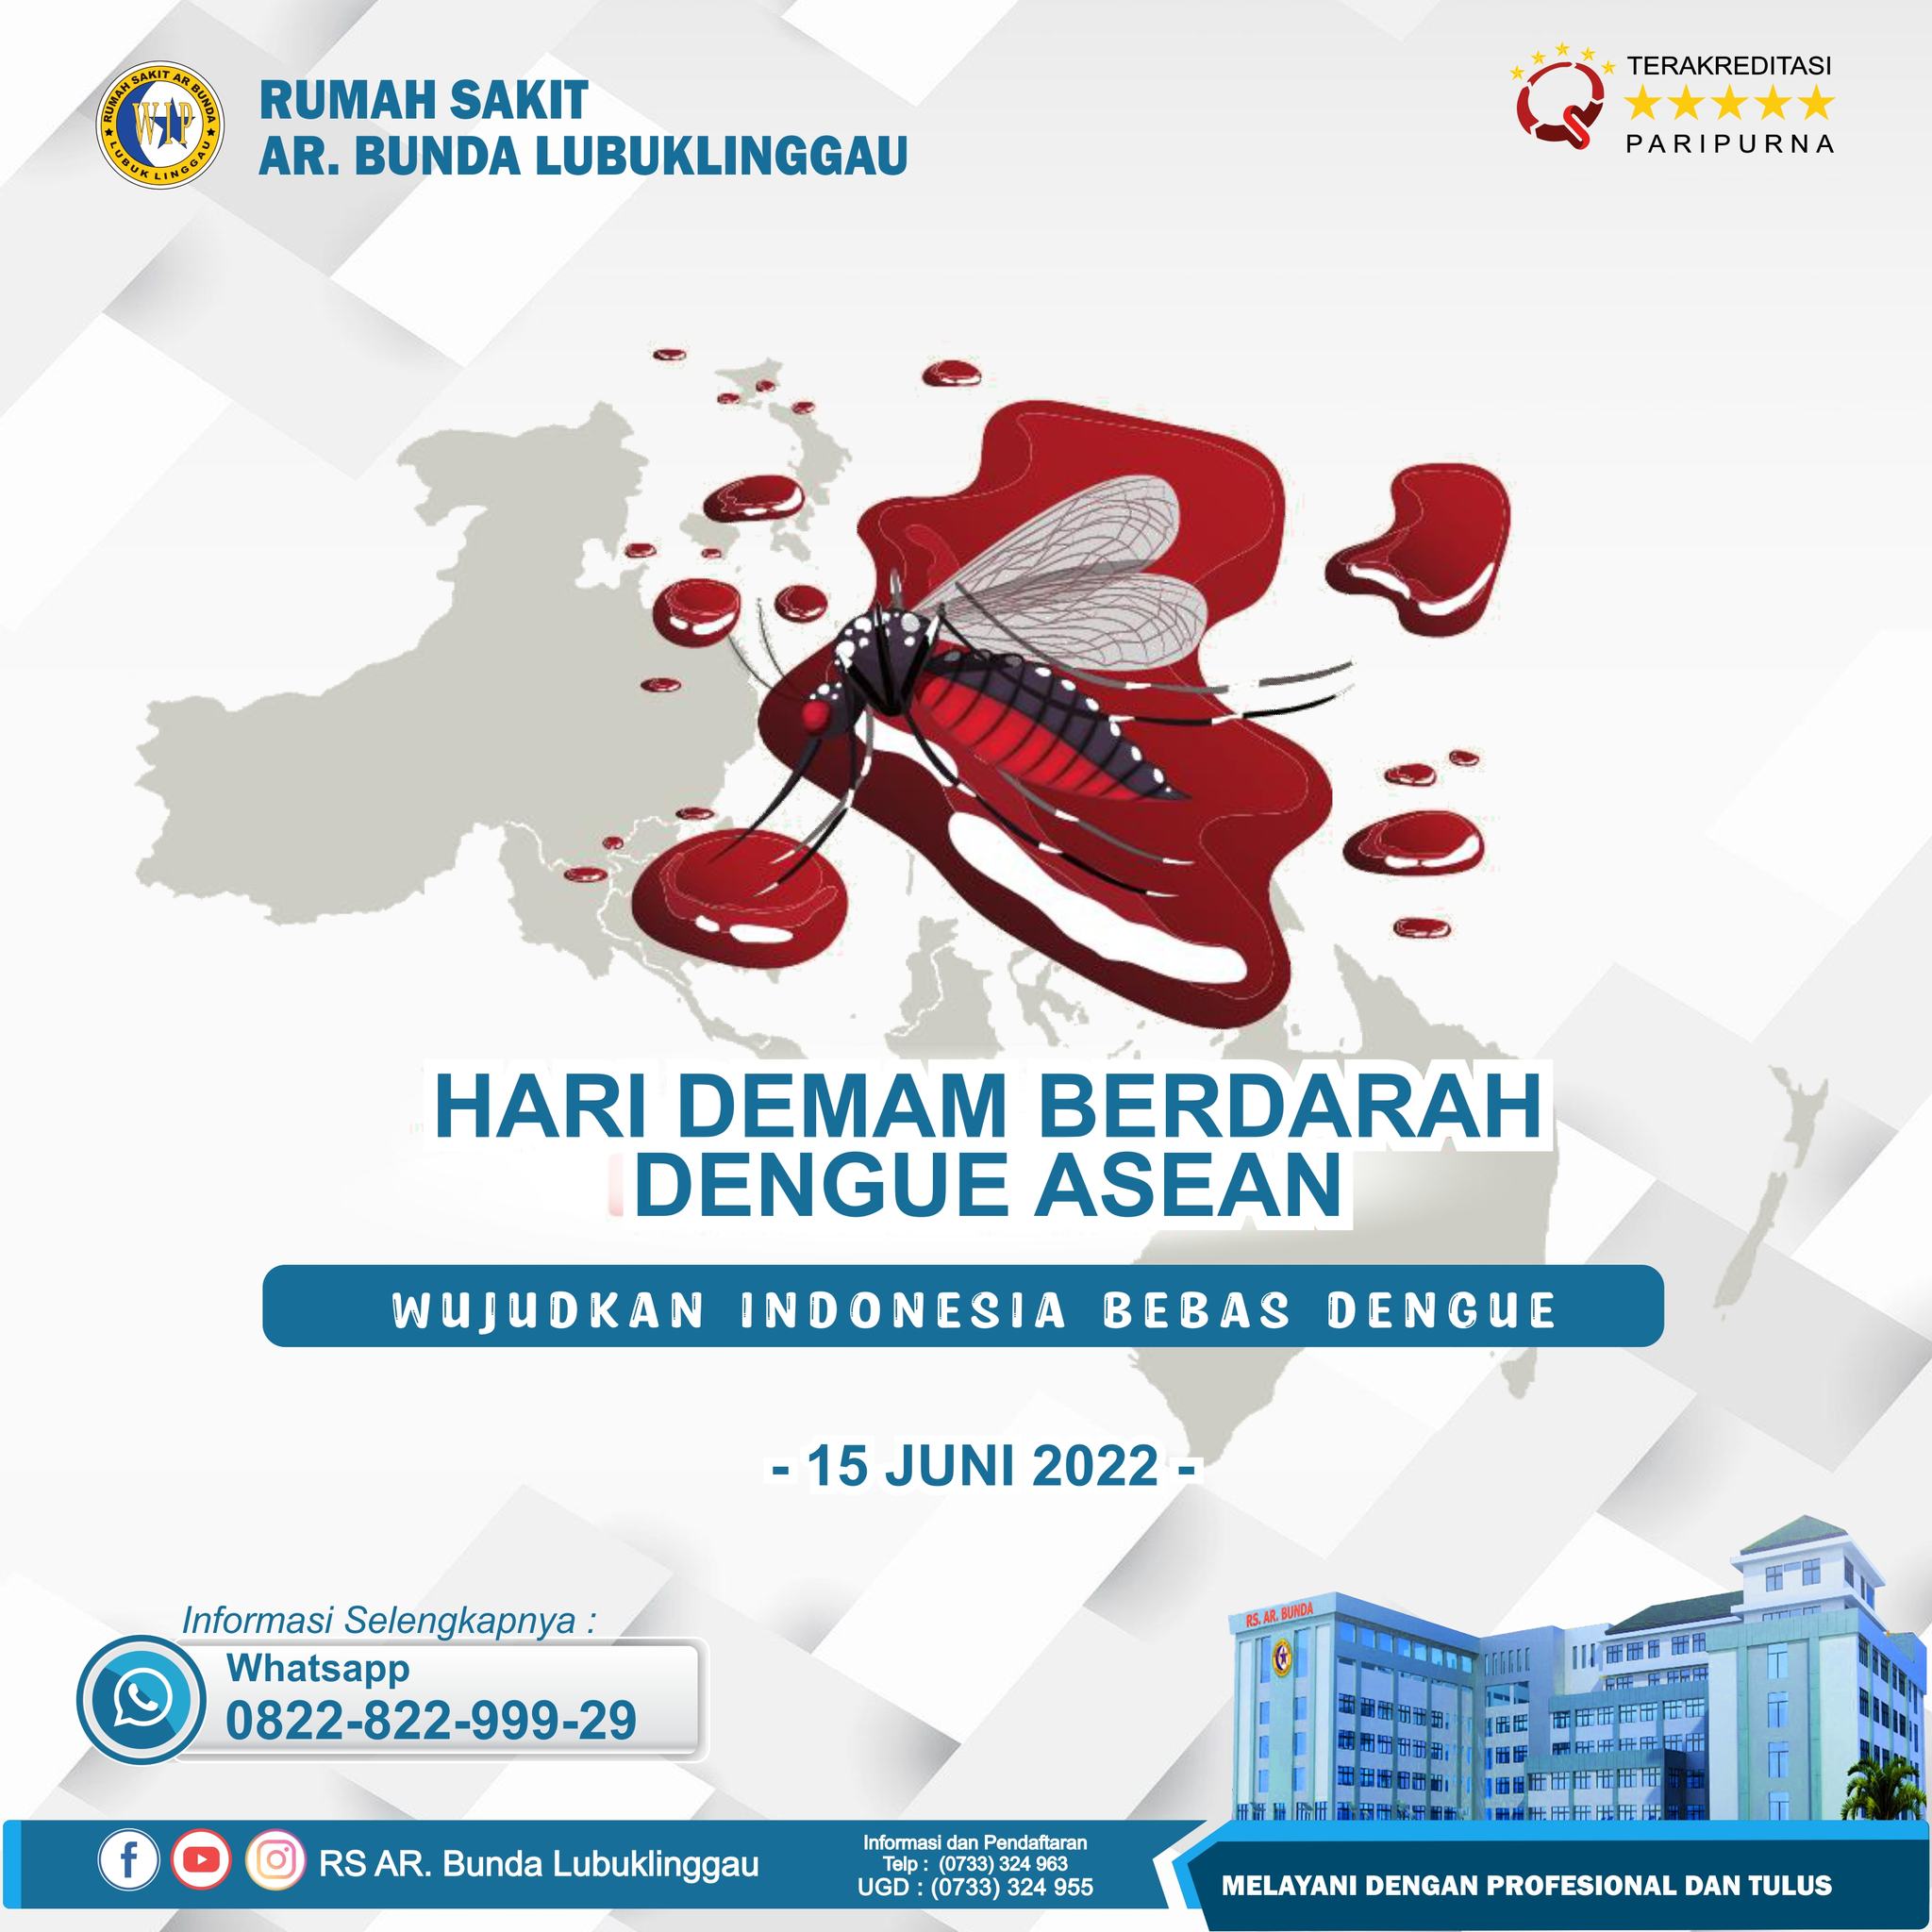 Hari Demam Berdarah Dengue Asean ” Wujudkan Indonesia Bebas Dengue”